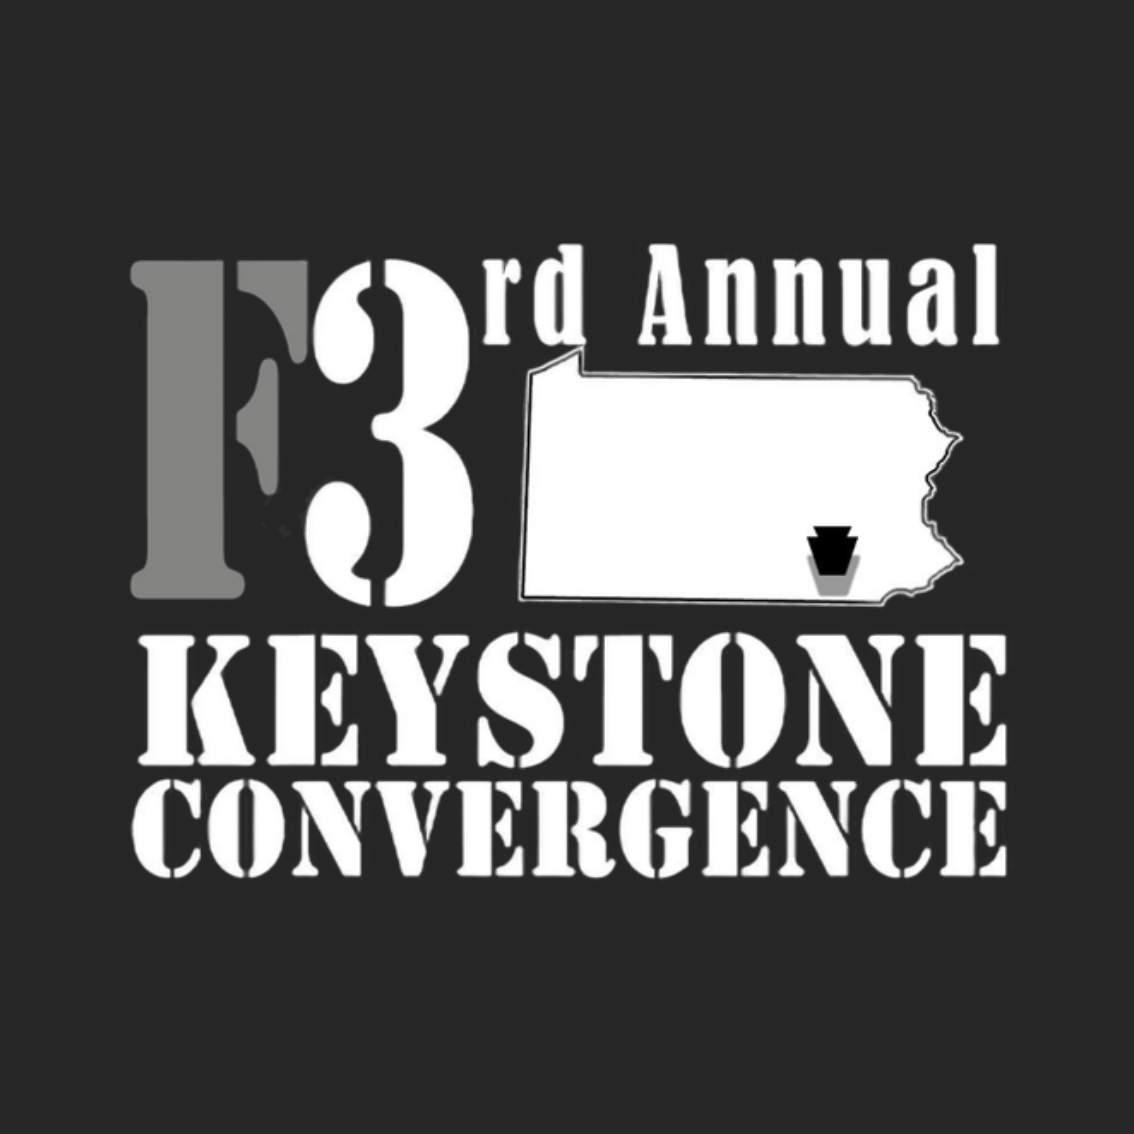 F3 3rd Annual Keystone Convergence Pre-Order April 2023